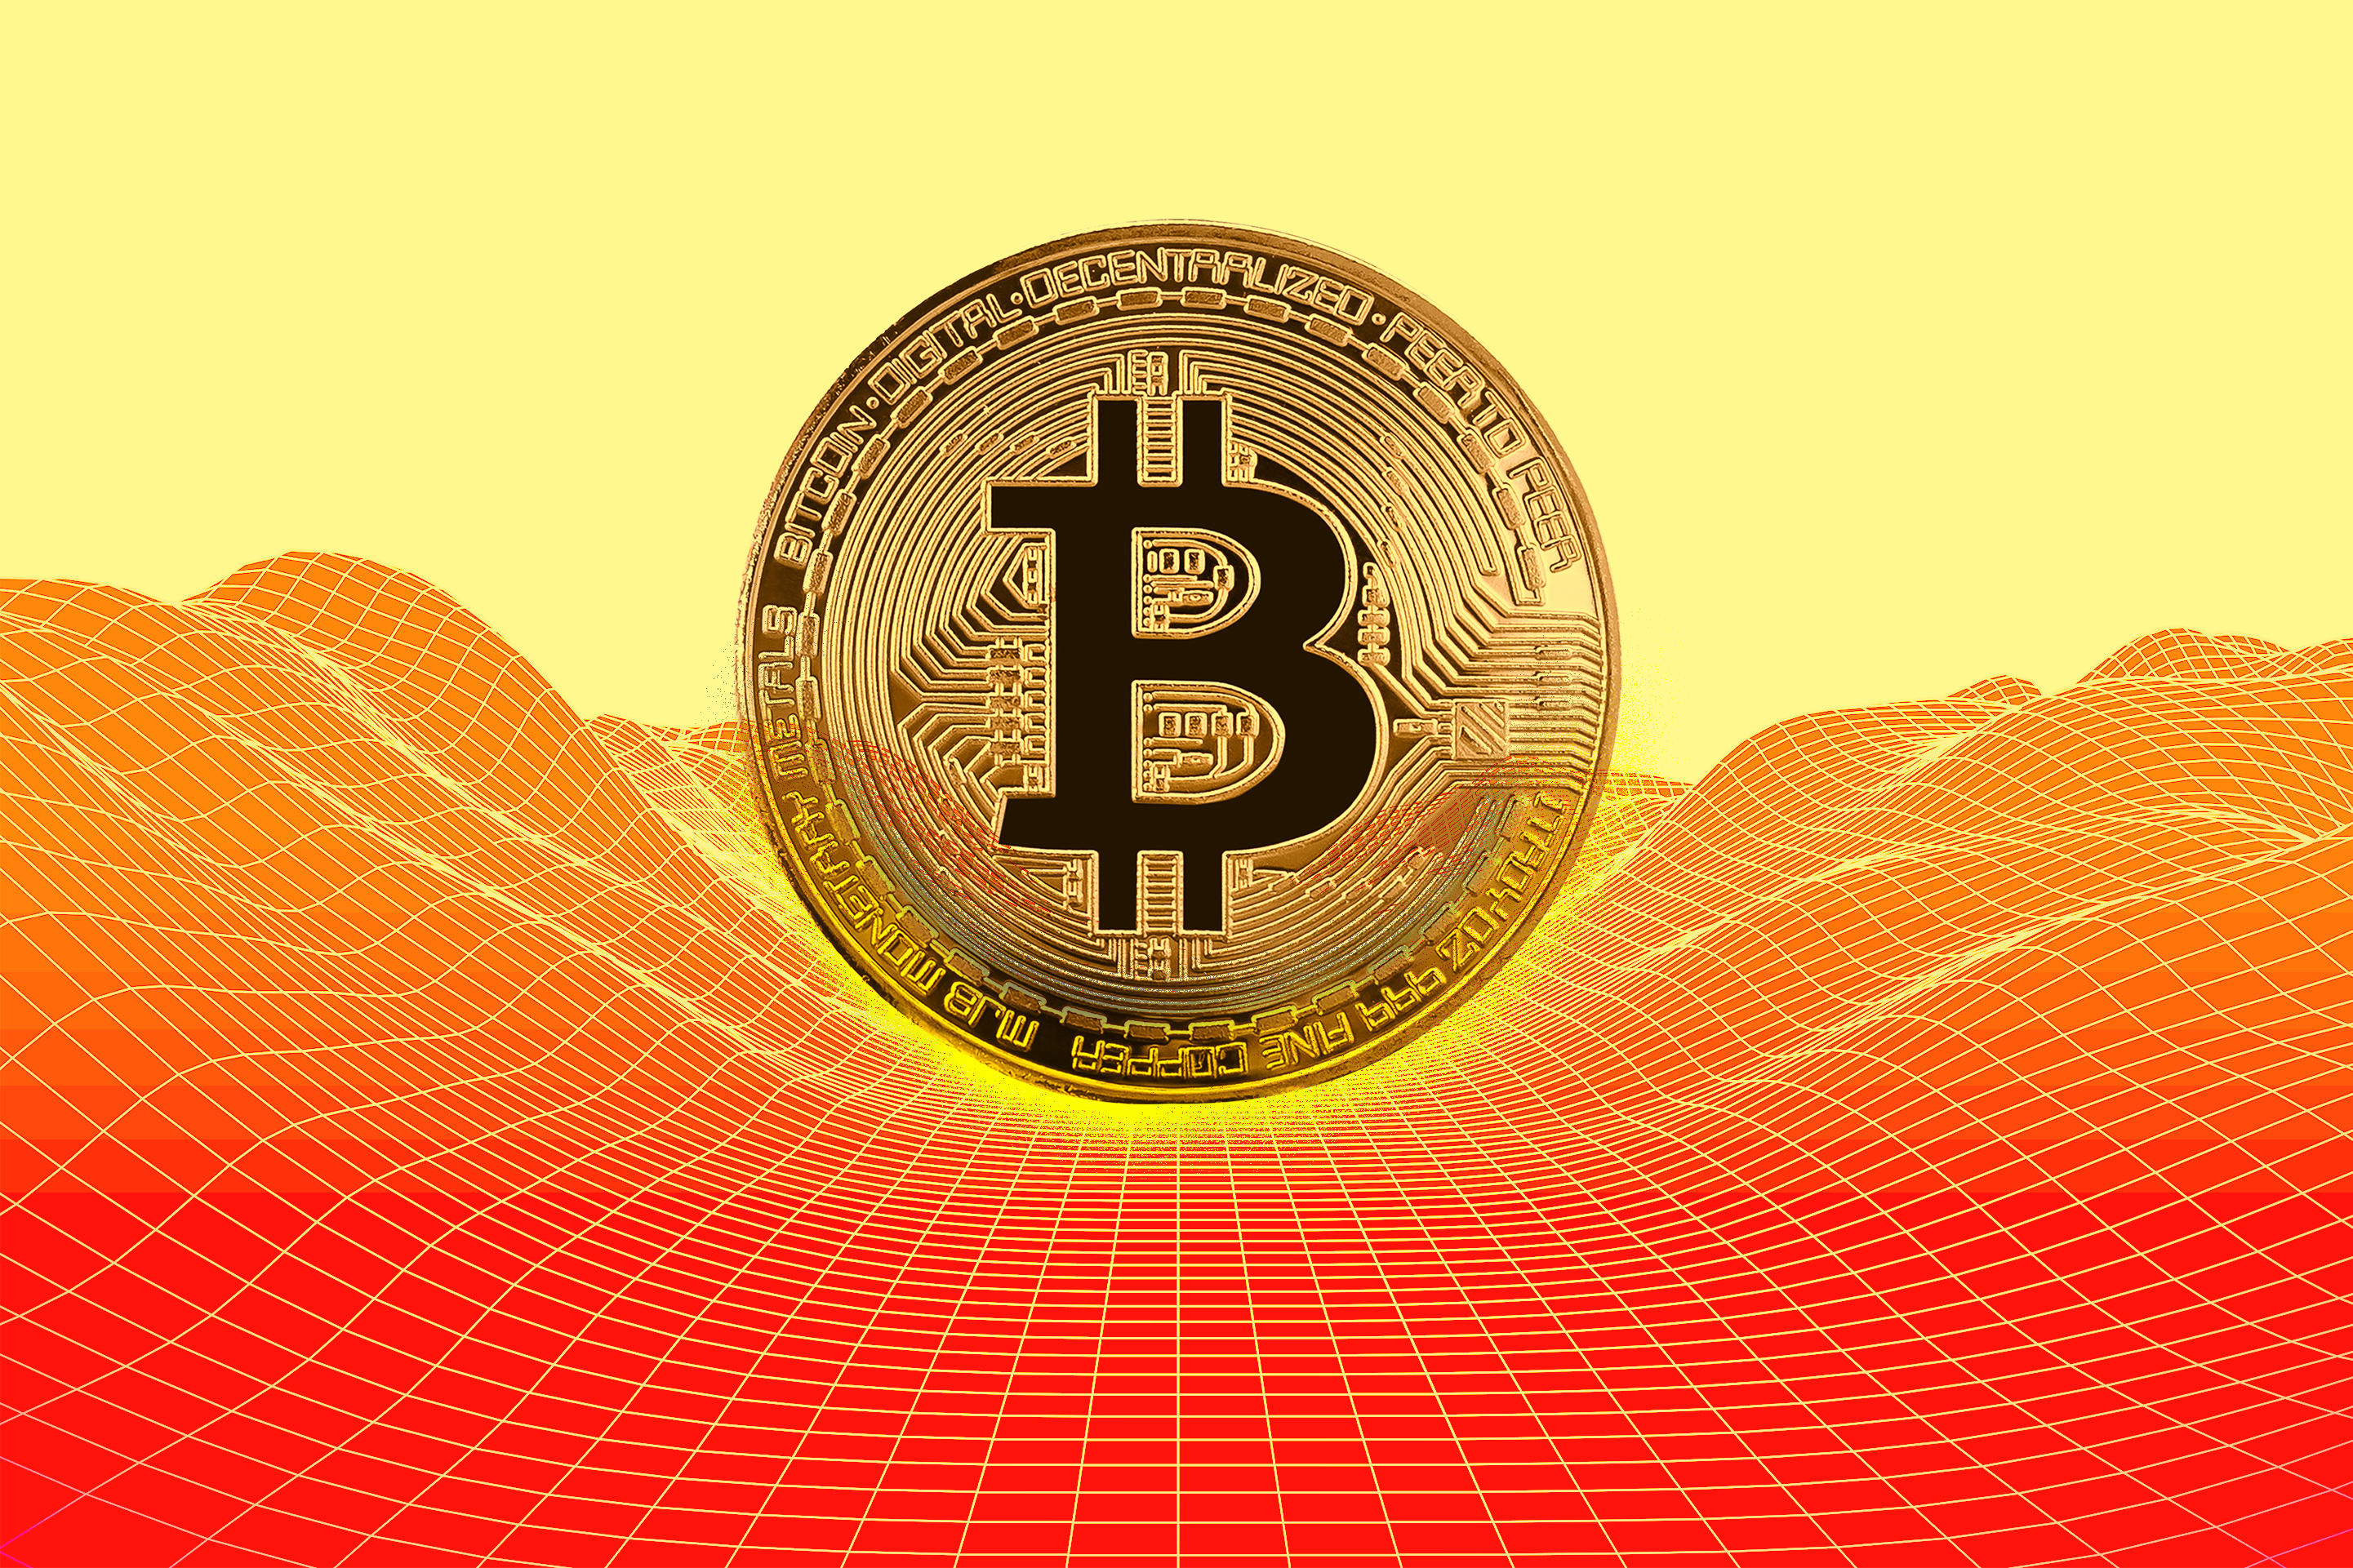 Moon bitcoin free money with bitcoins value nz ozforex news